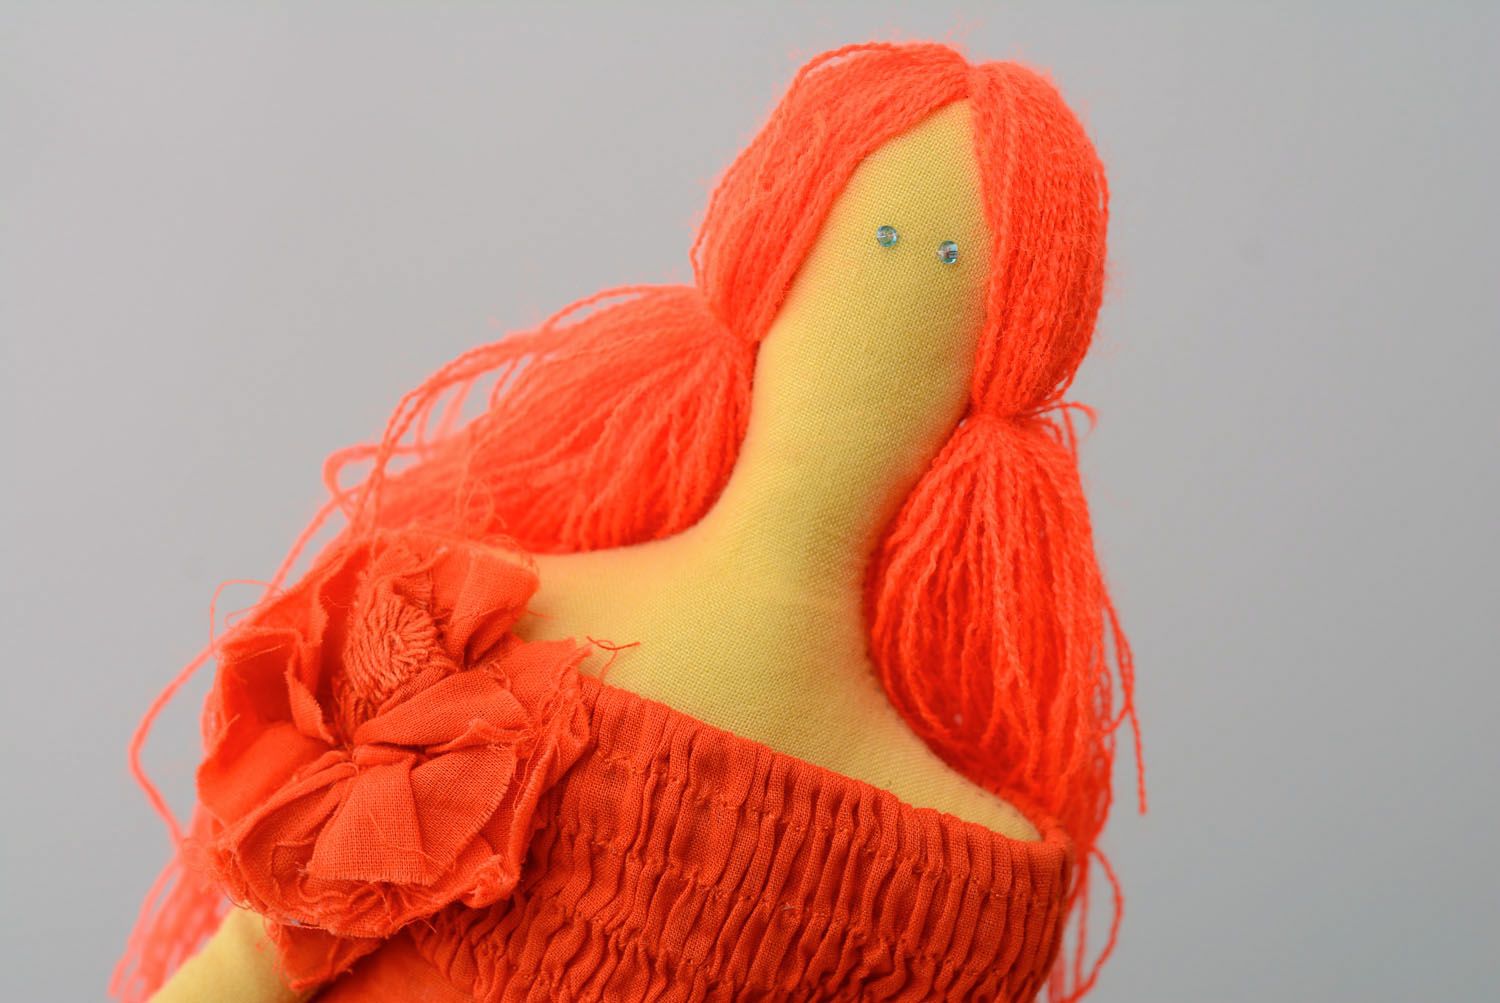 Designer doll with ginger hair photo 2